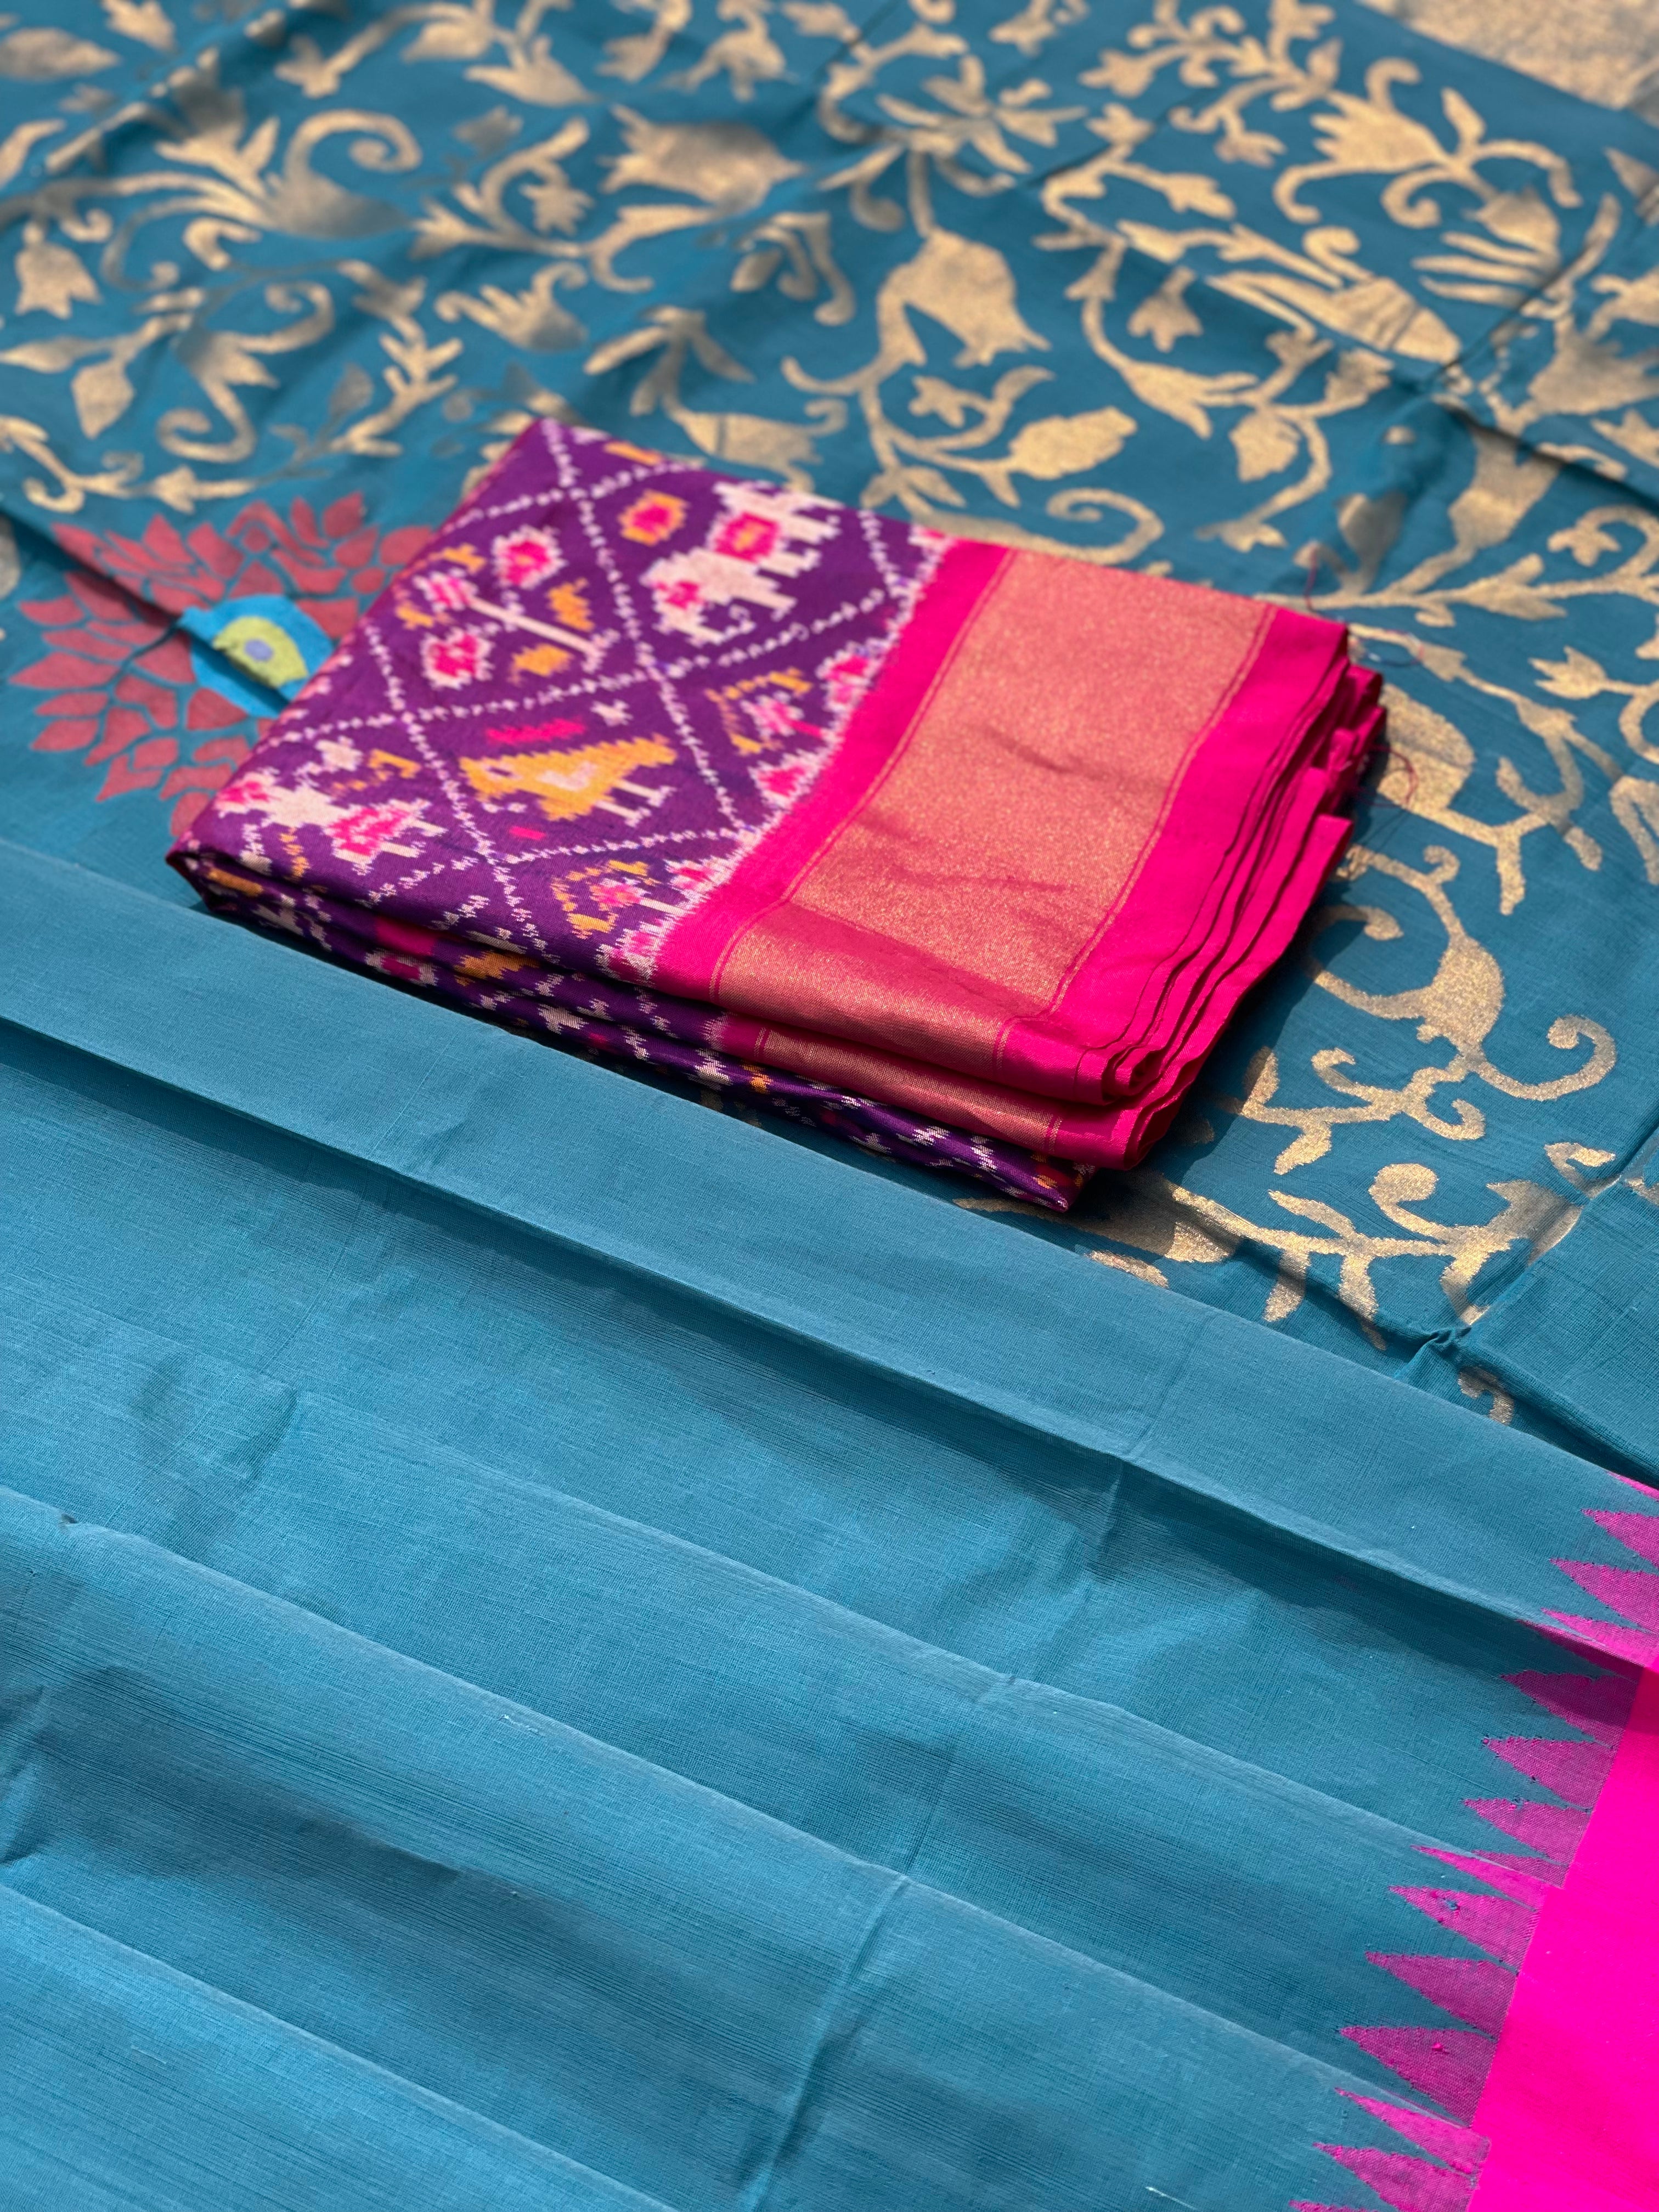 Teal Peacock blue with pink Ponduru khadi Jamdani cotton saree